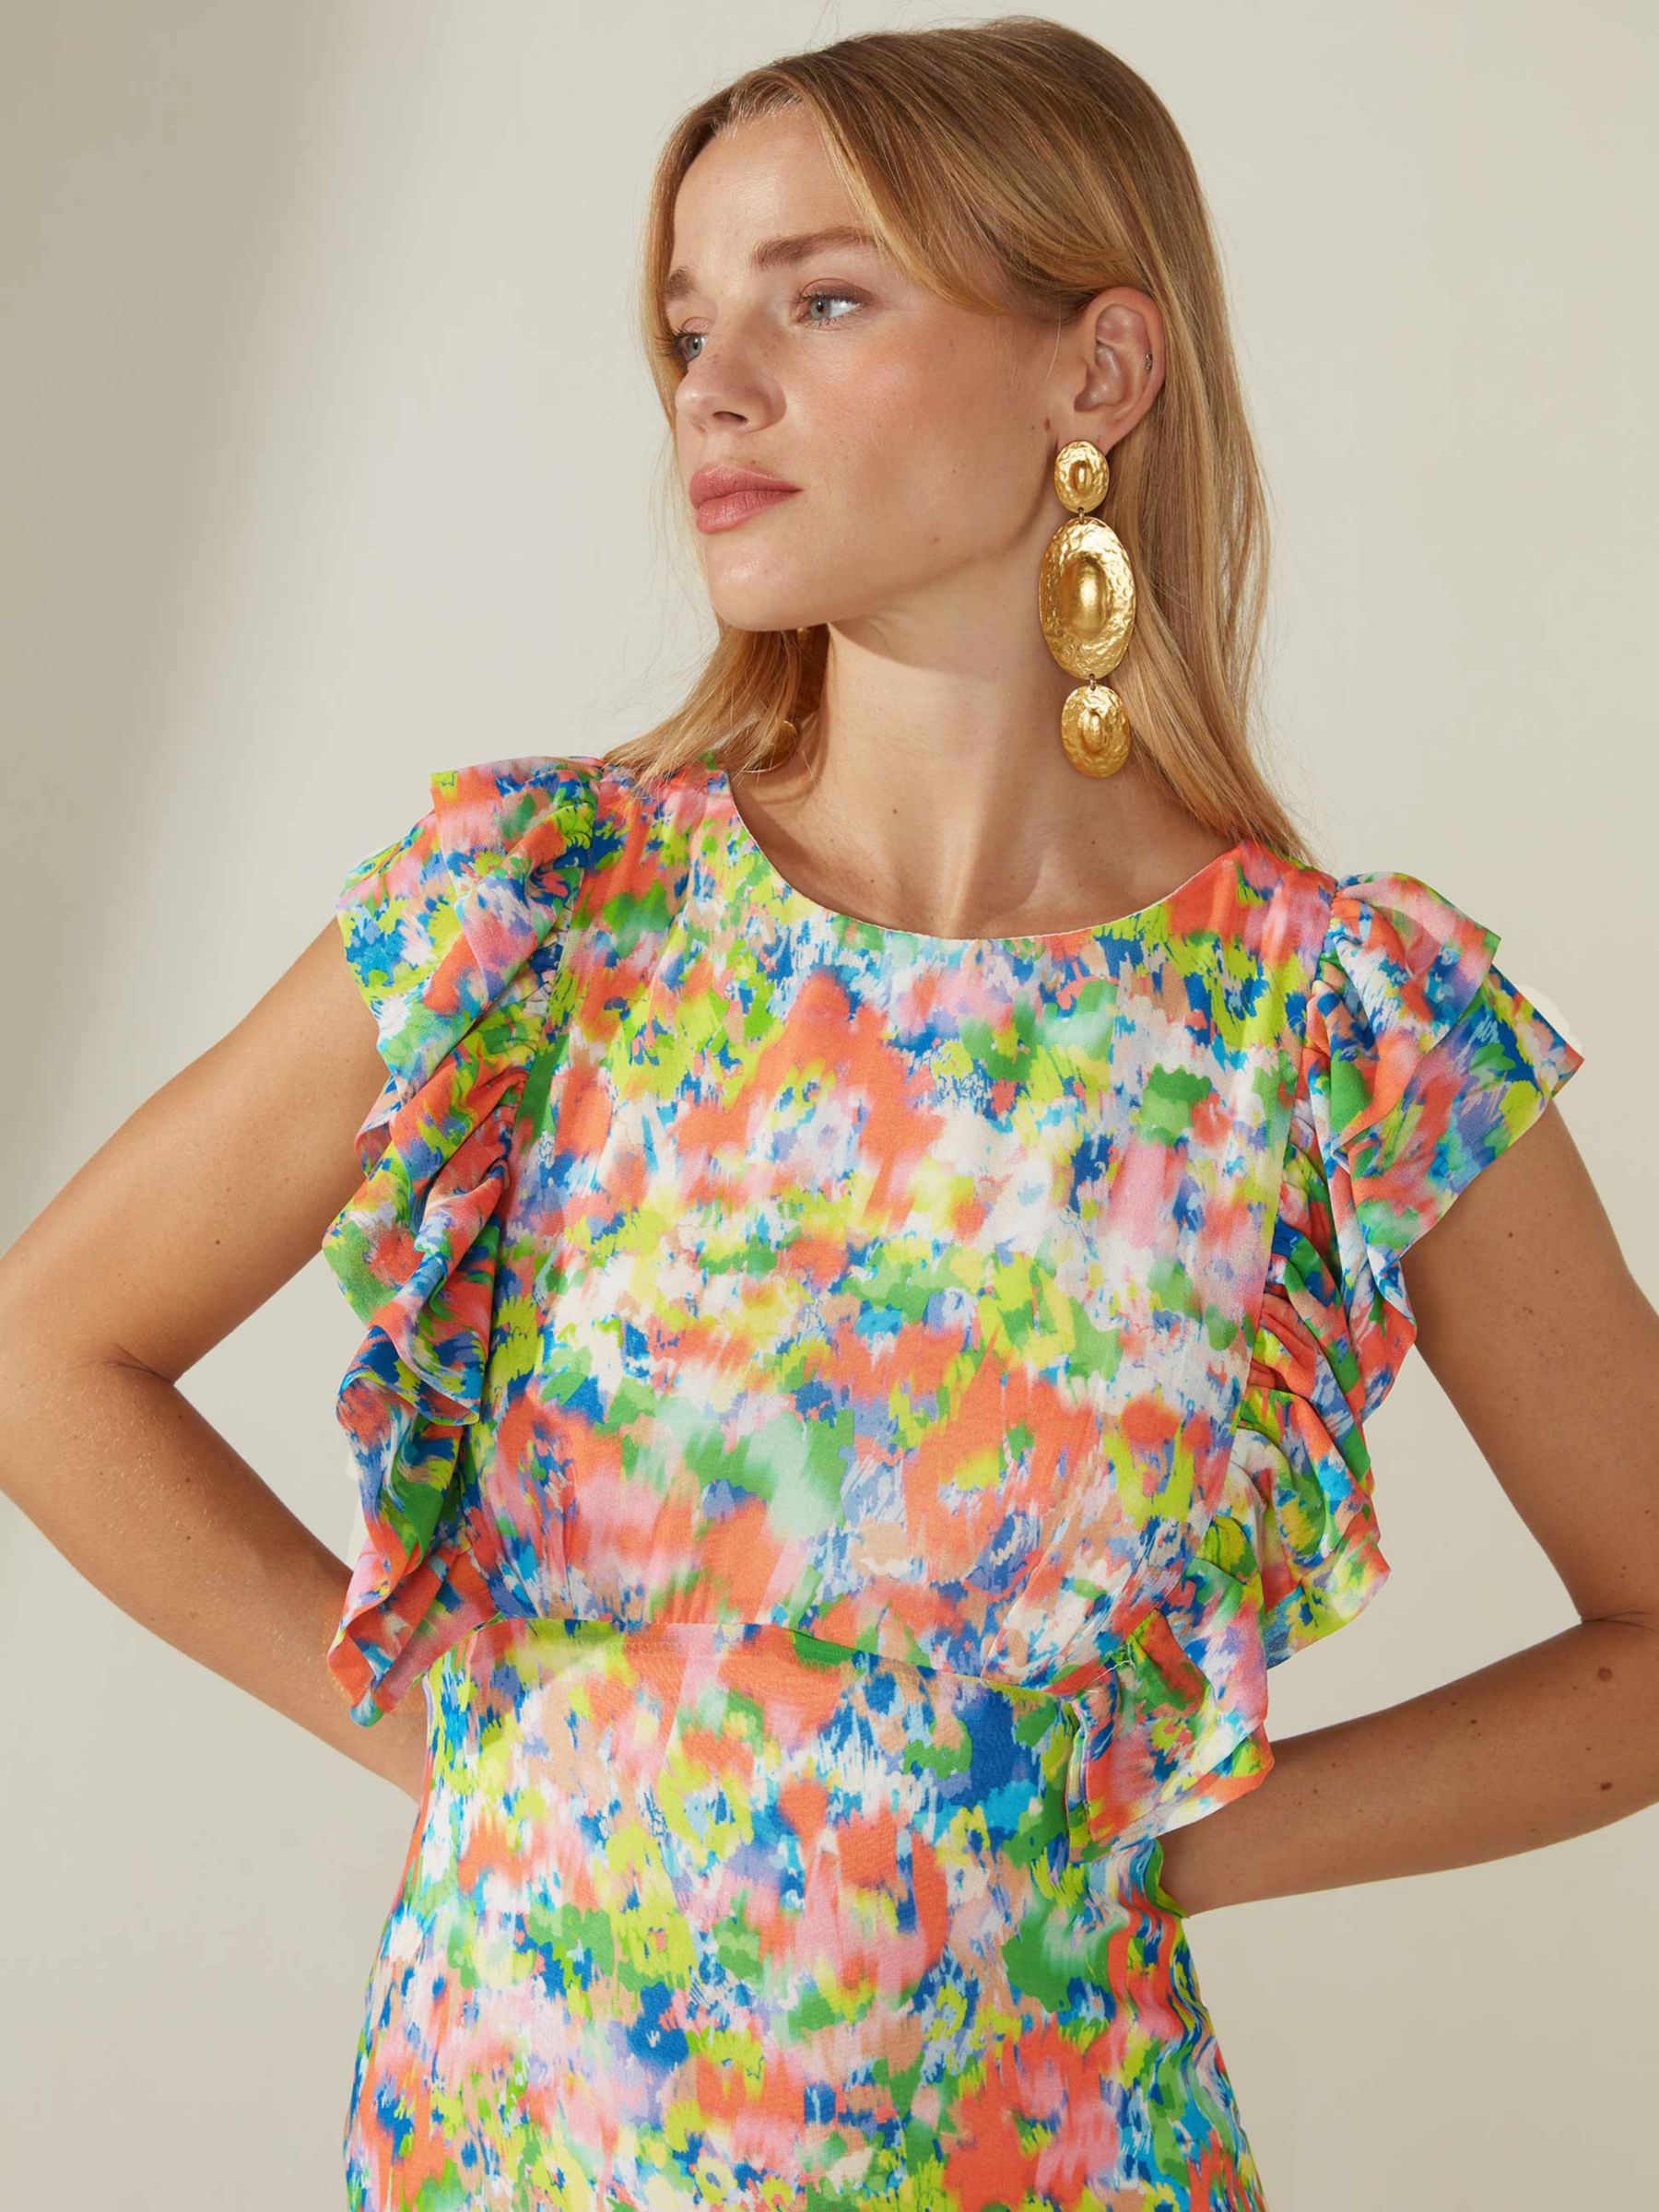 Ro&Zo Elise Ditsy Floral Midi Dress, Multi at John Lewis & Partners